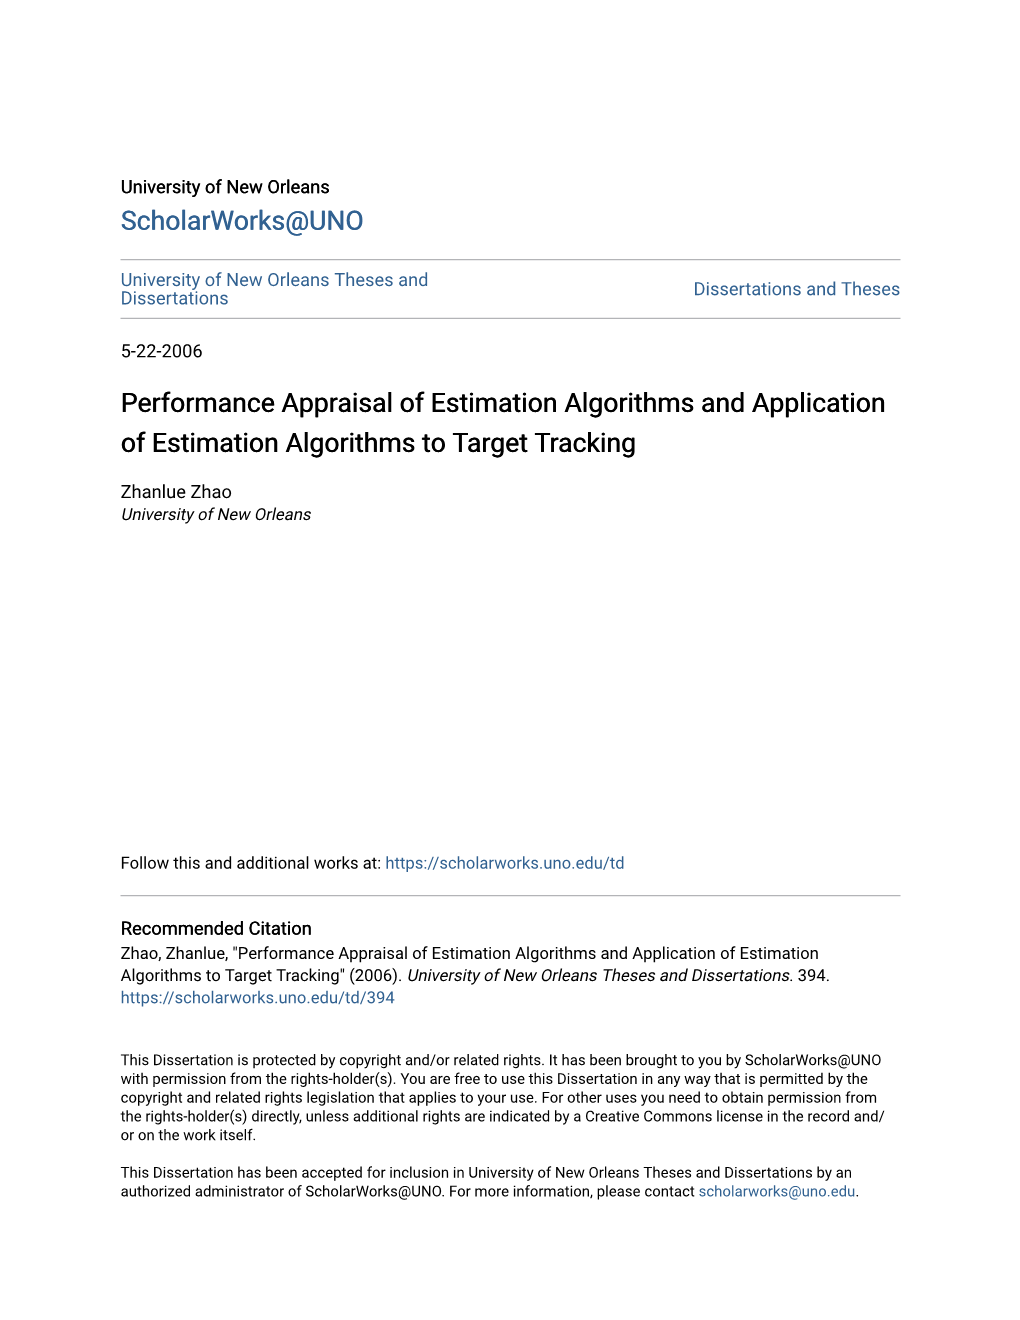 Performance Appraisal of Estimation Algorithms and Application of Estimation Algorithms to Target Tracking